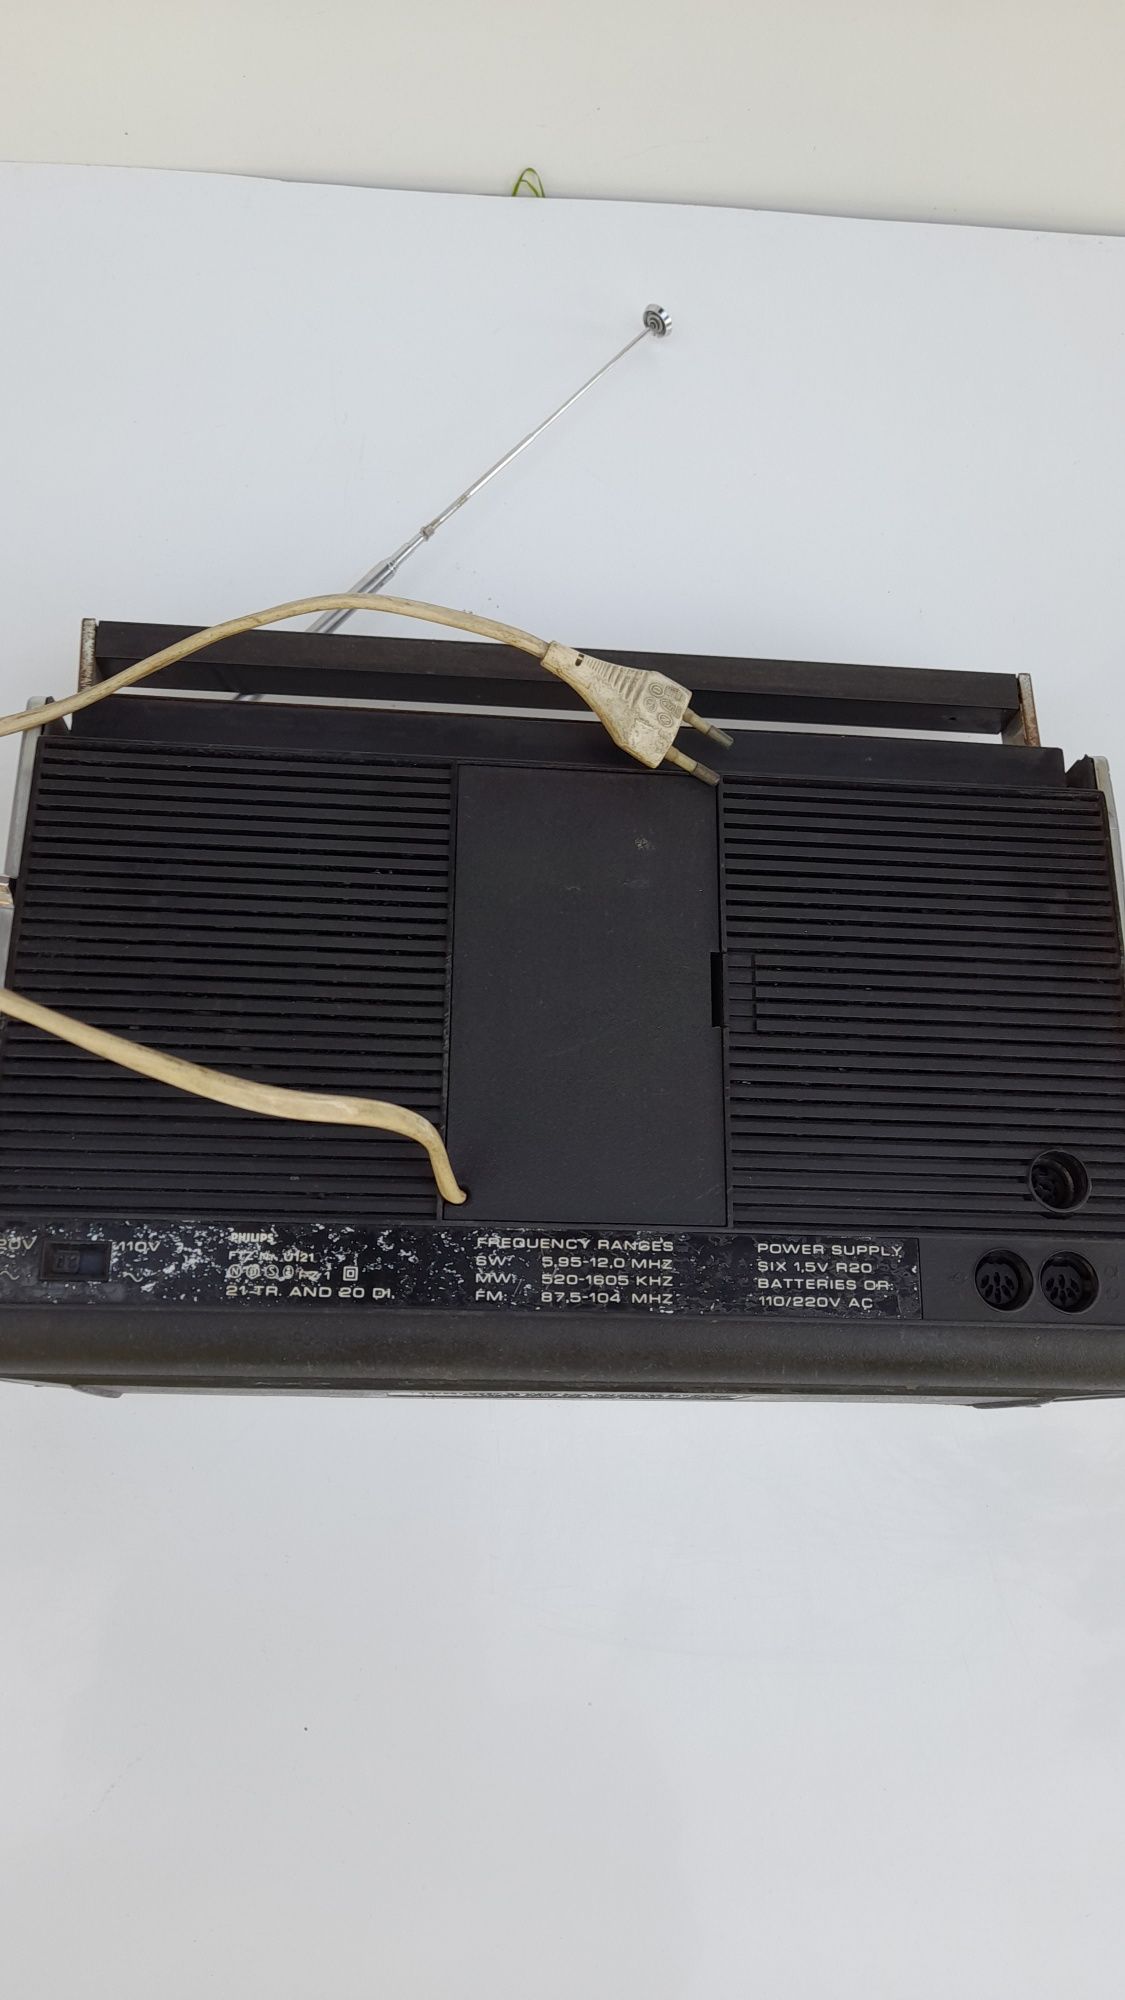 Radio magnetofon Philips FTZ U121 21TR 20DI radiorecorder stare zabytk